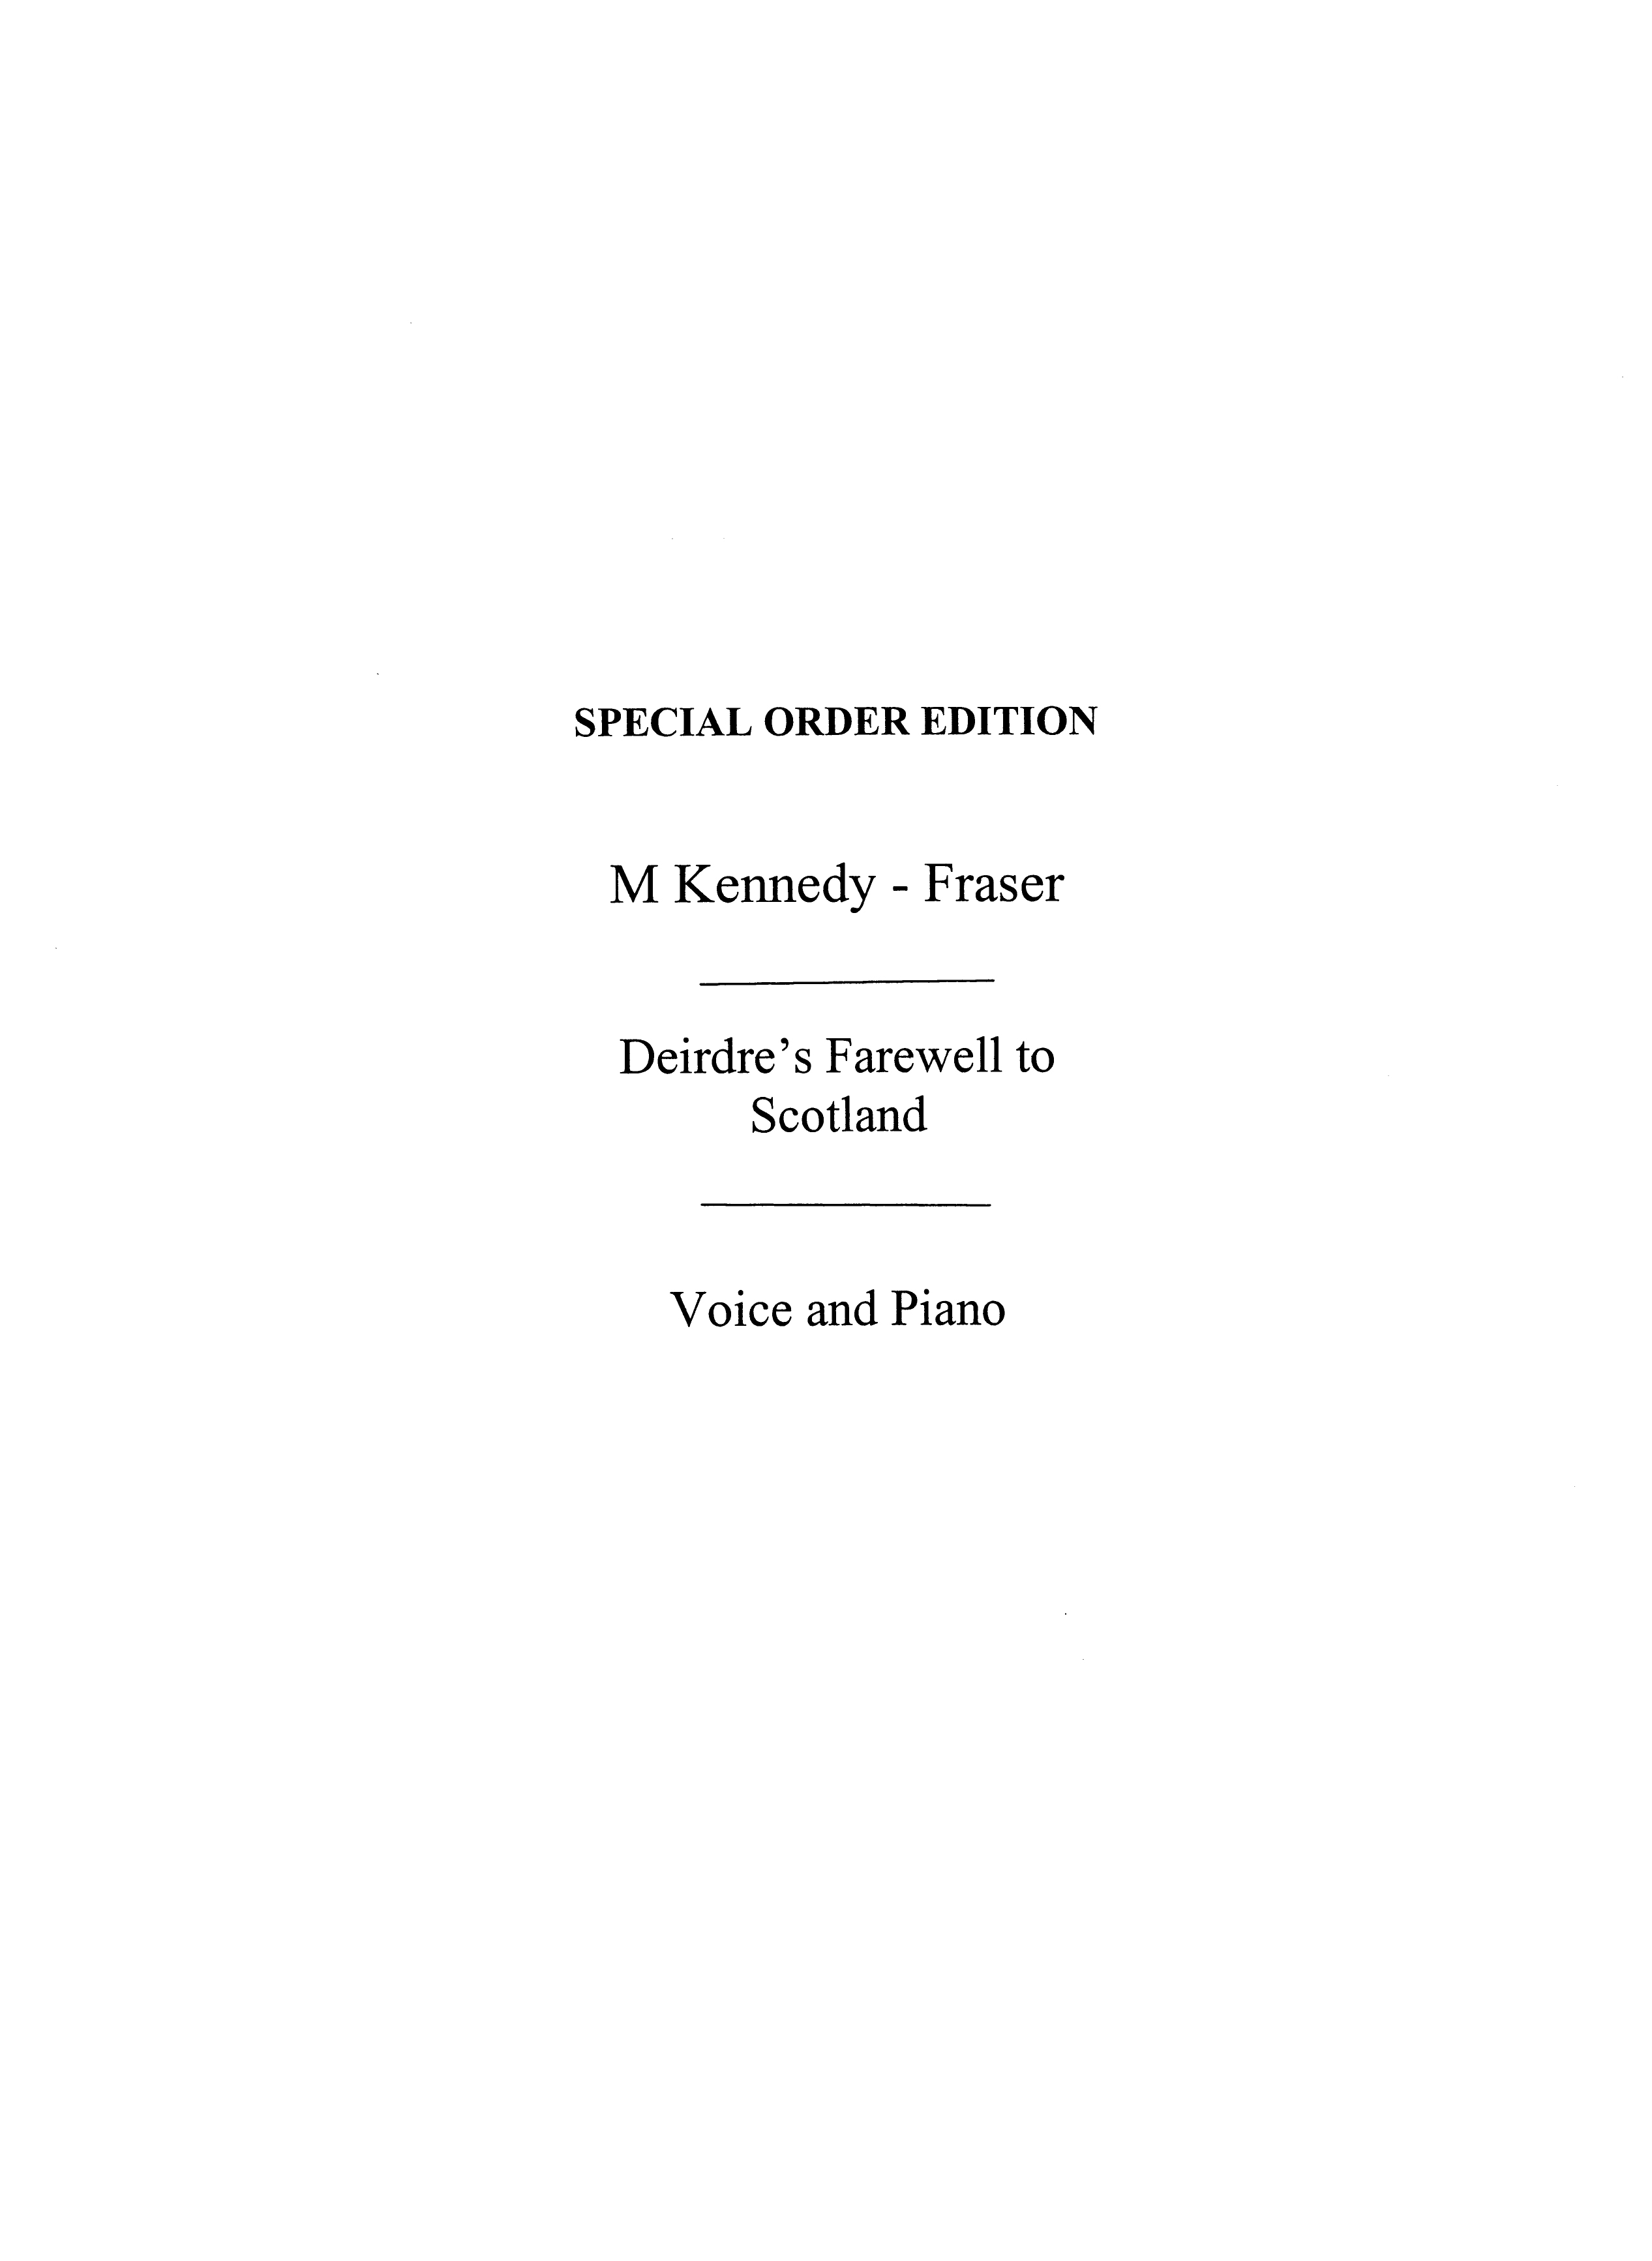 Marjory Kennedy-Fraser: Deidre's Farewell To Scotland: Voice: Single Sheet